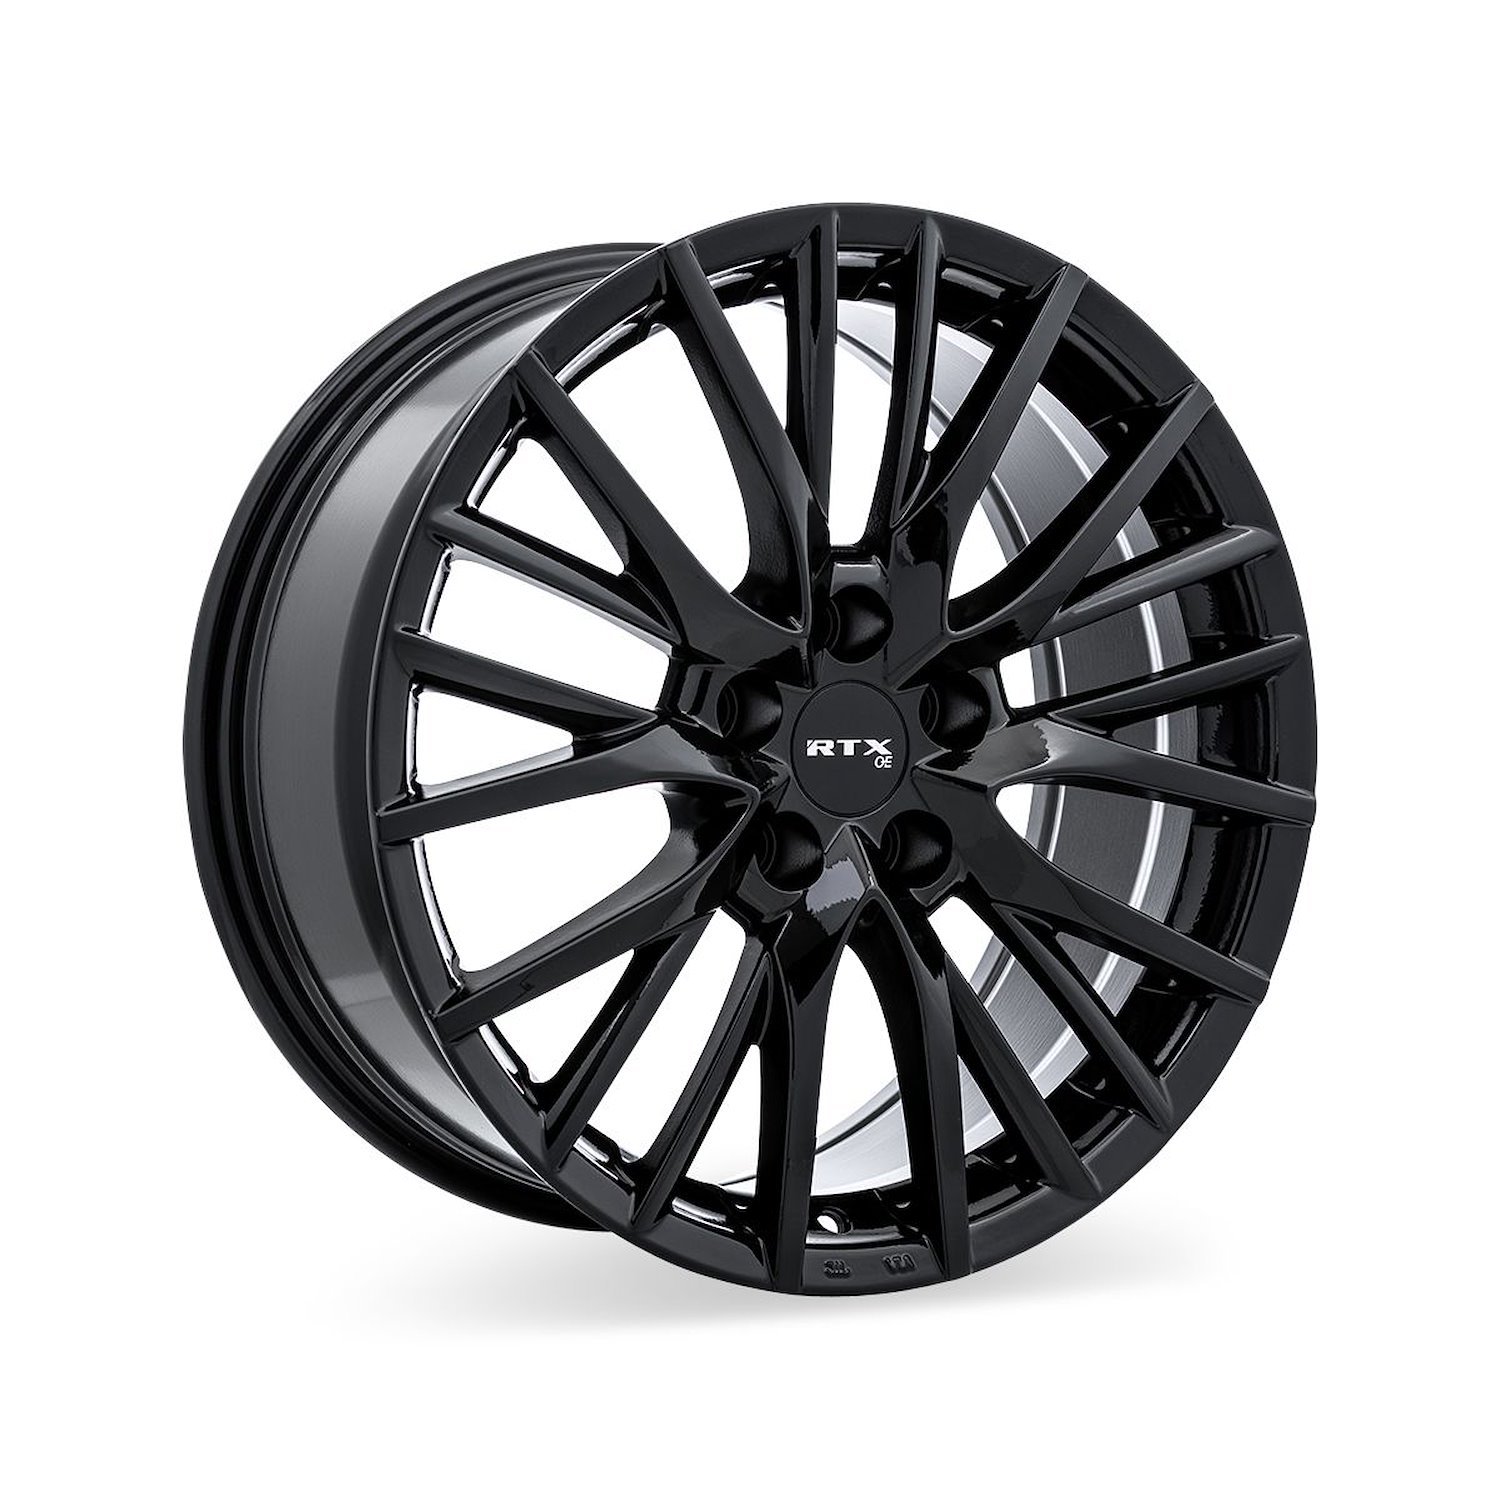 083090 OE-Series Kyo Wheel [Size: 18" x 8"] Gloss Black Finish